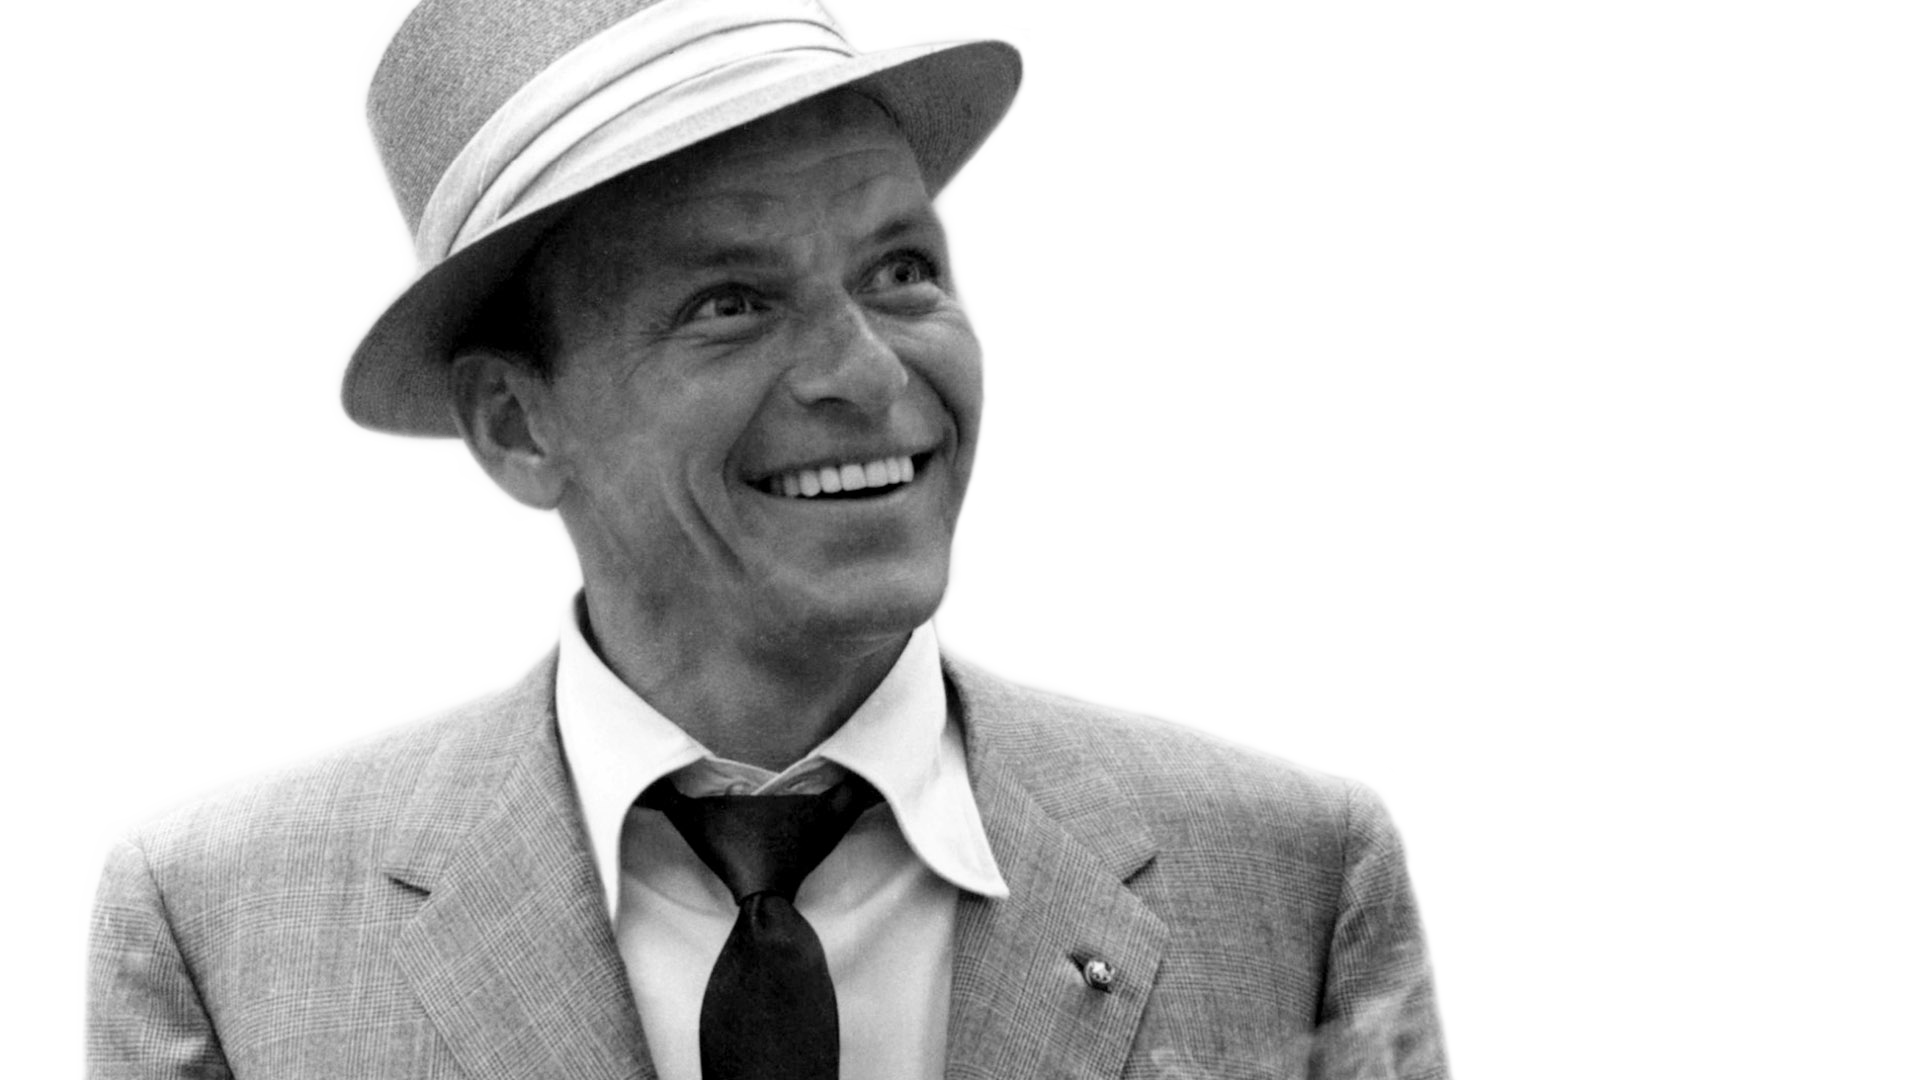 Francis Albert Sinatra